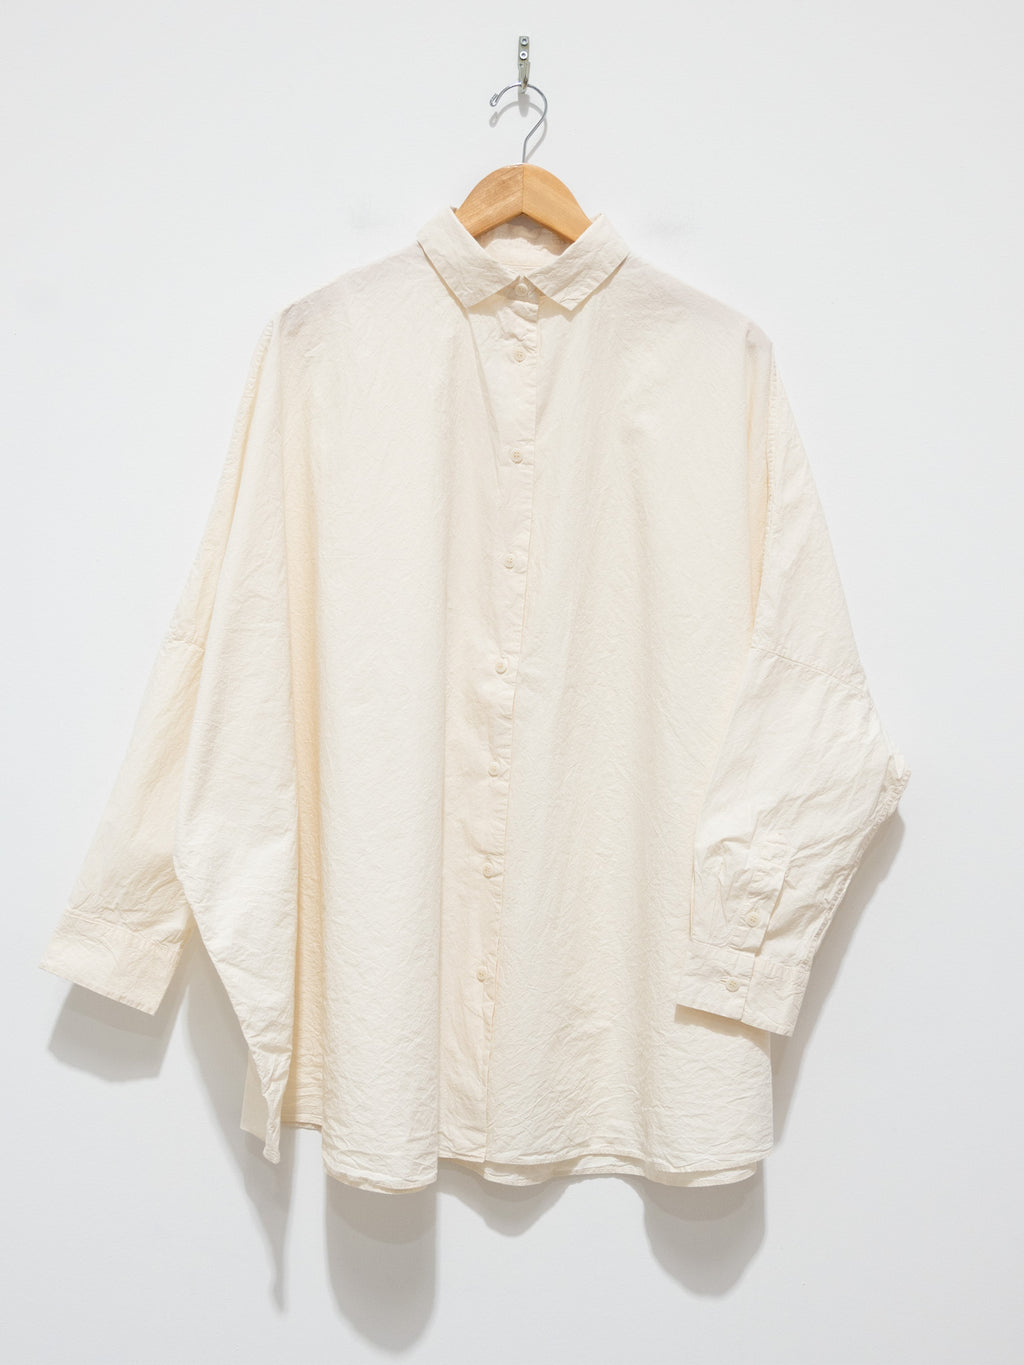 Namu Shop - Casey Casey Atomless Shirt Light Cotton - Natural